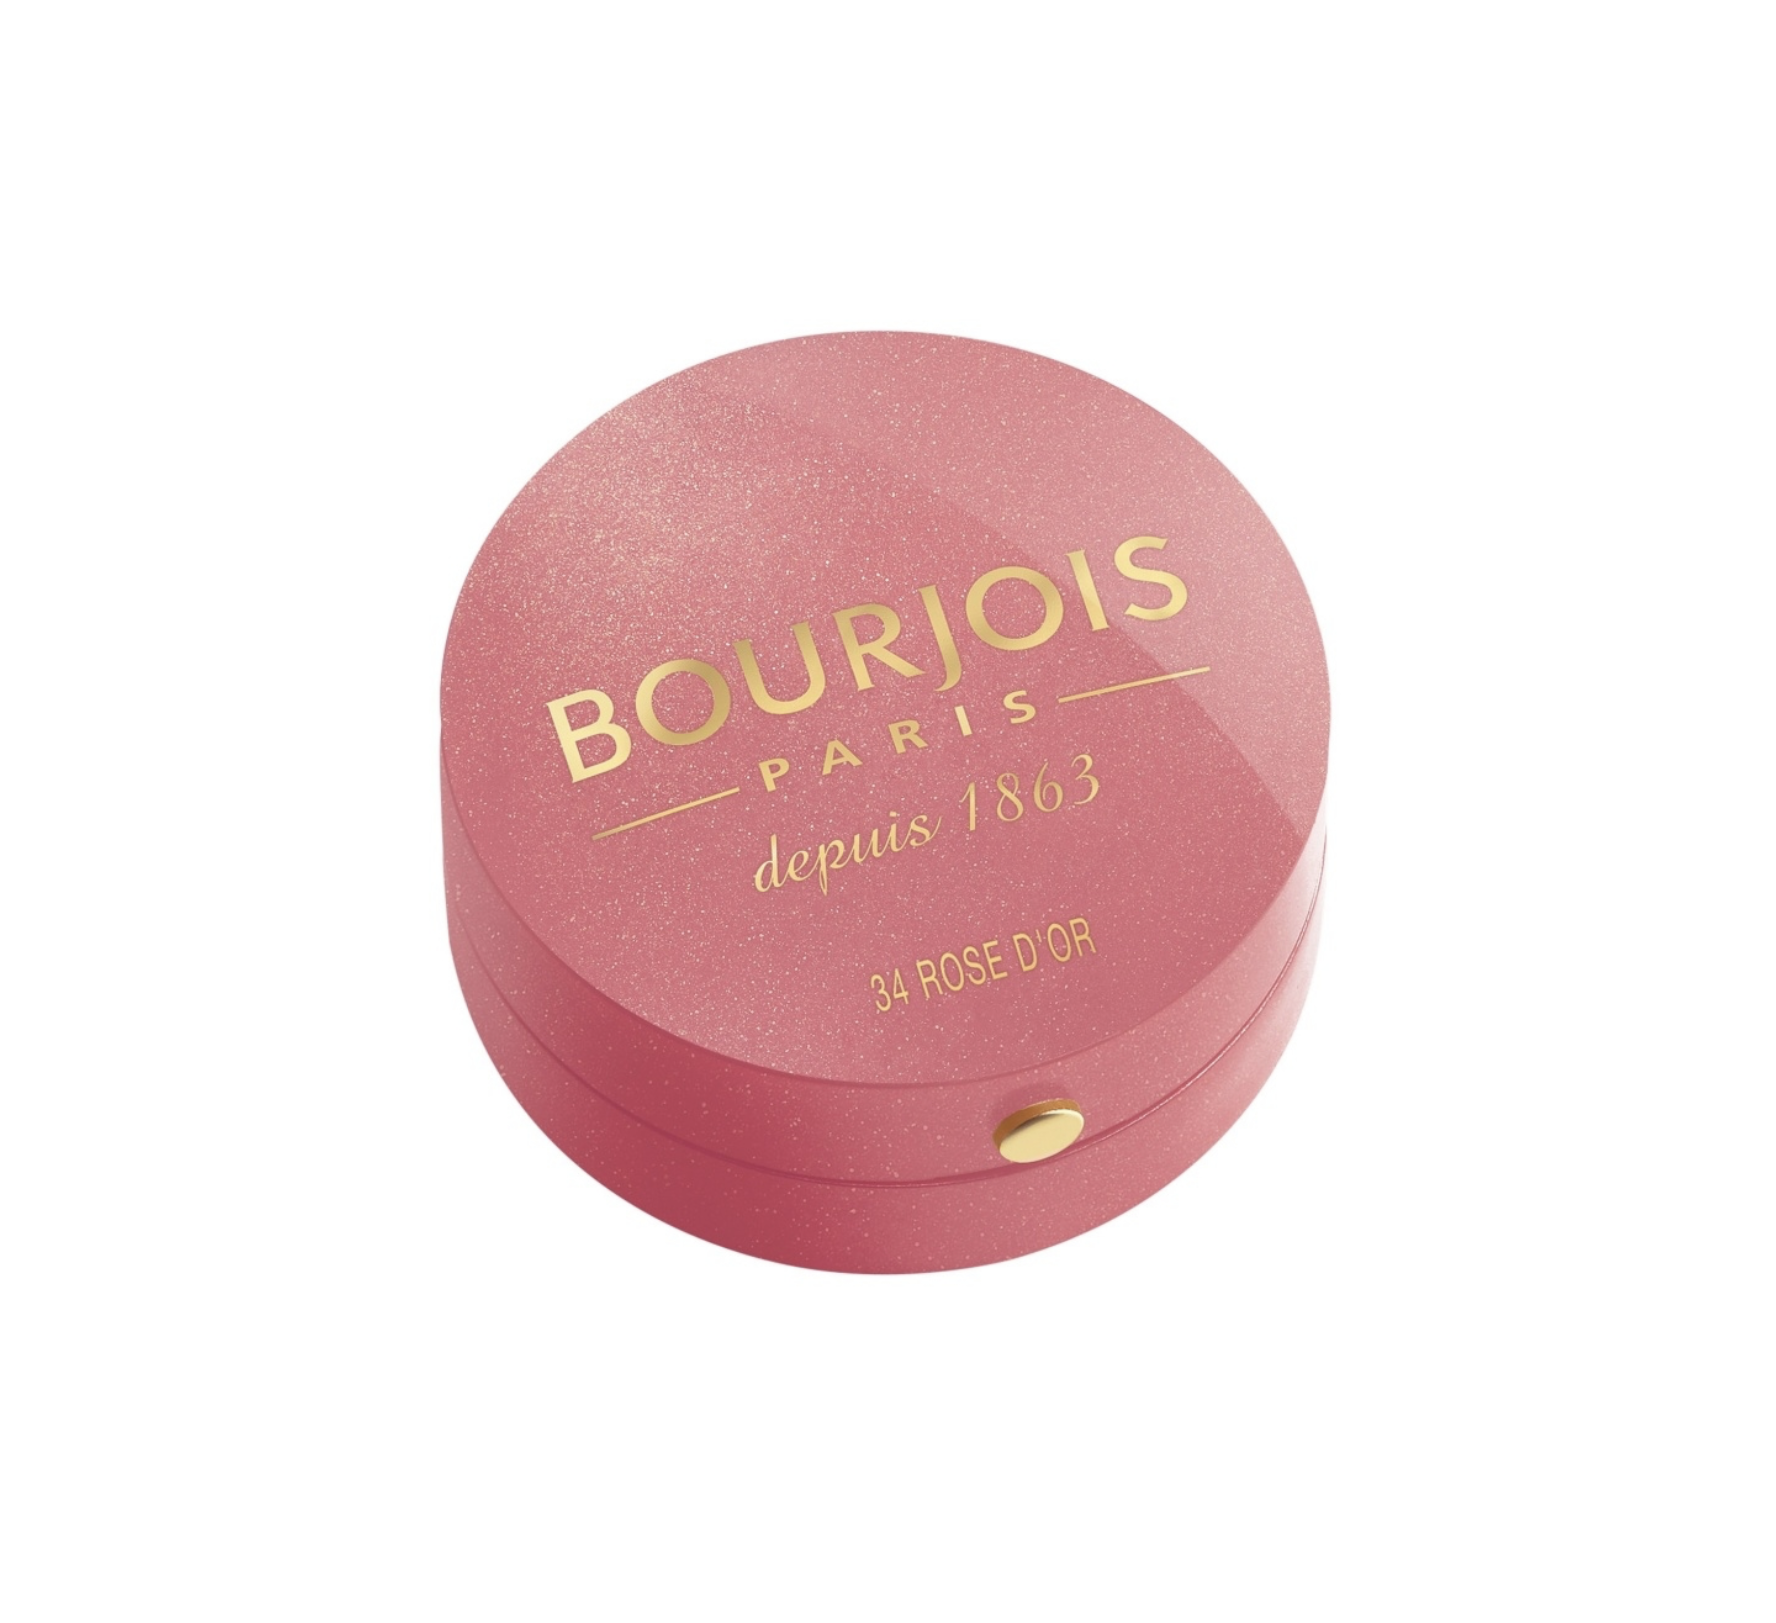    / Bourjois Paris -  Blusher  34 Golden Rose 2,5 